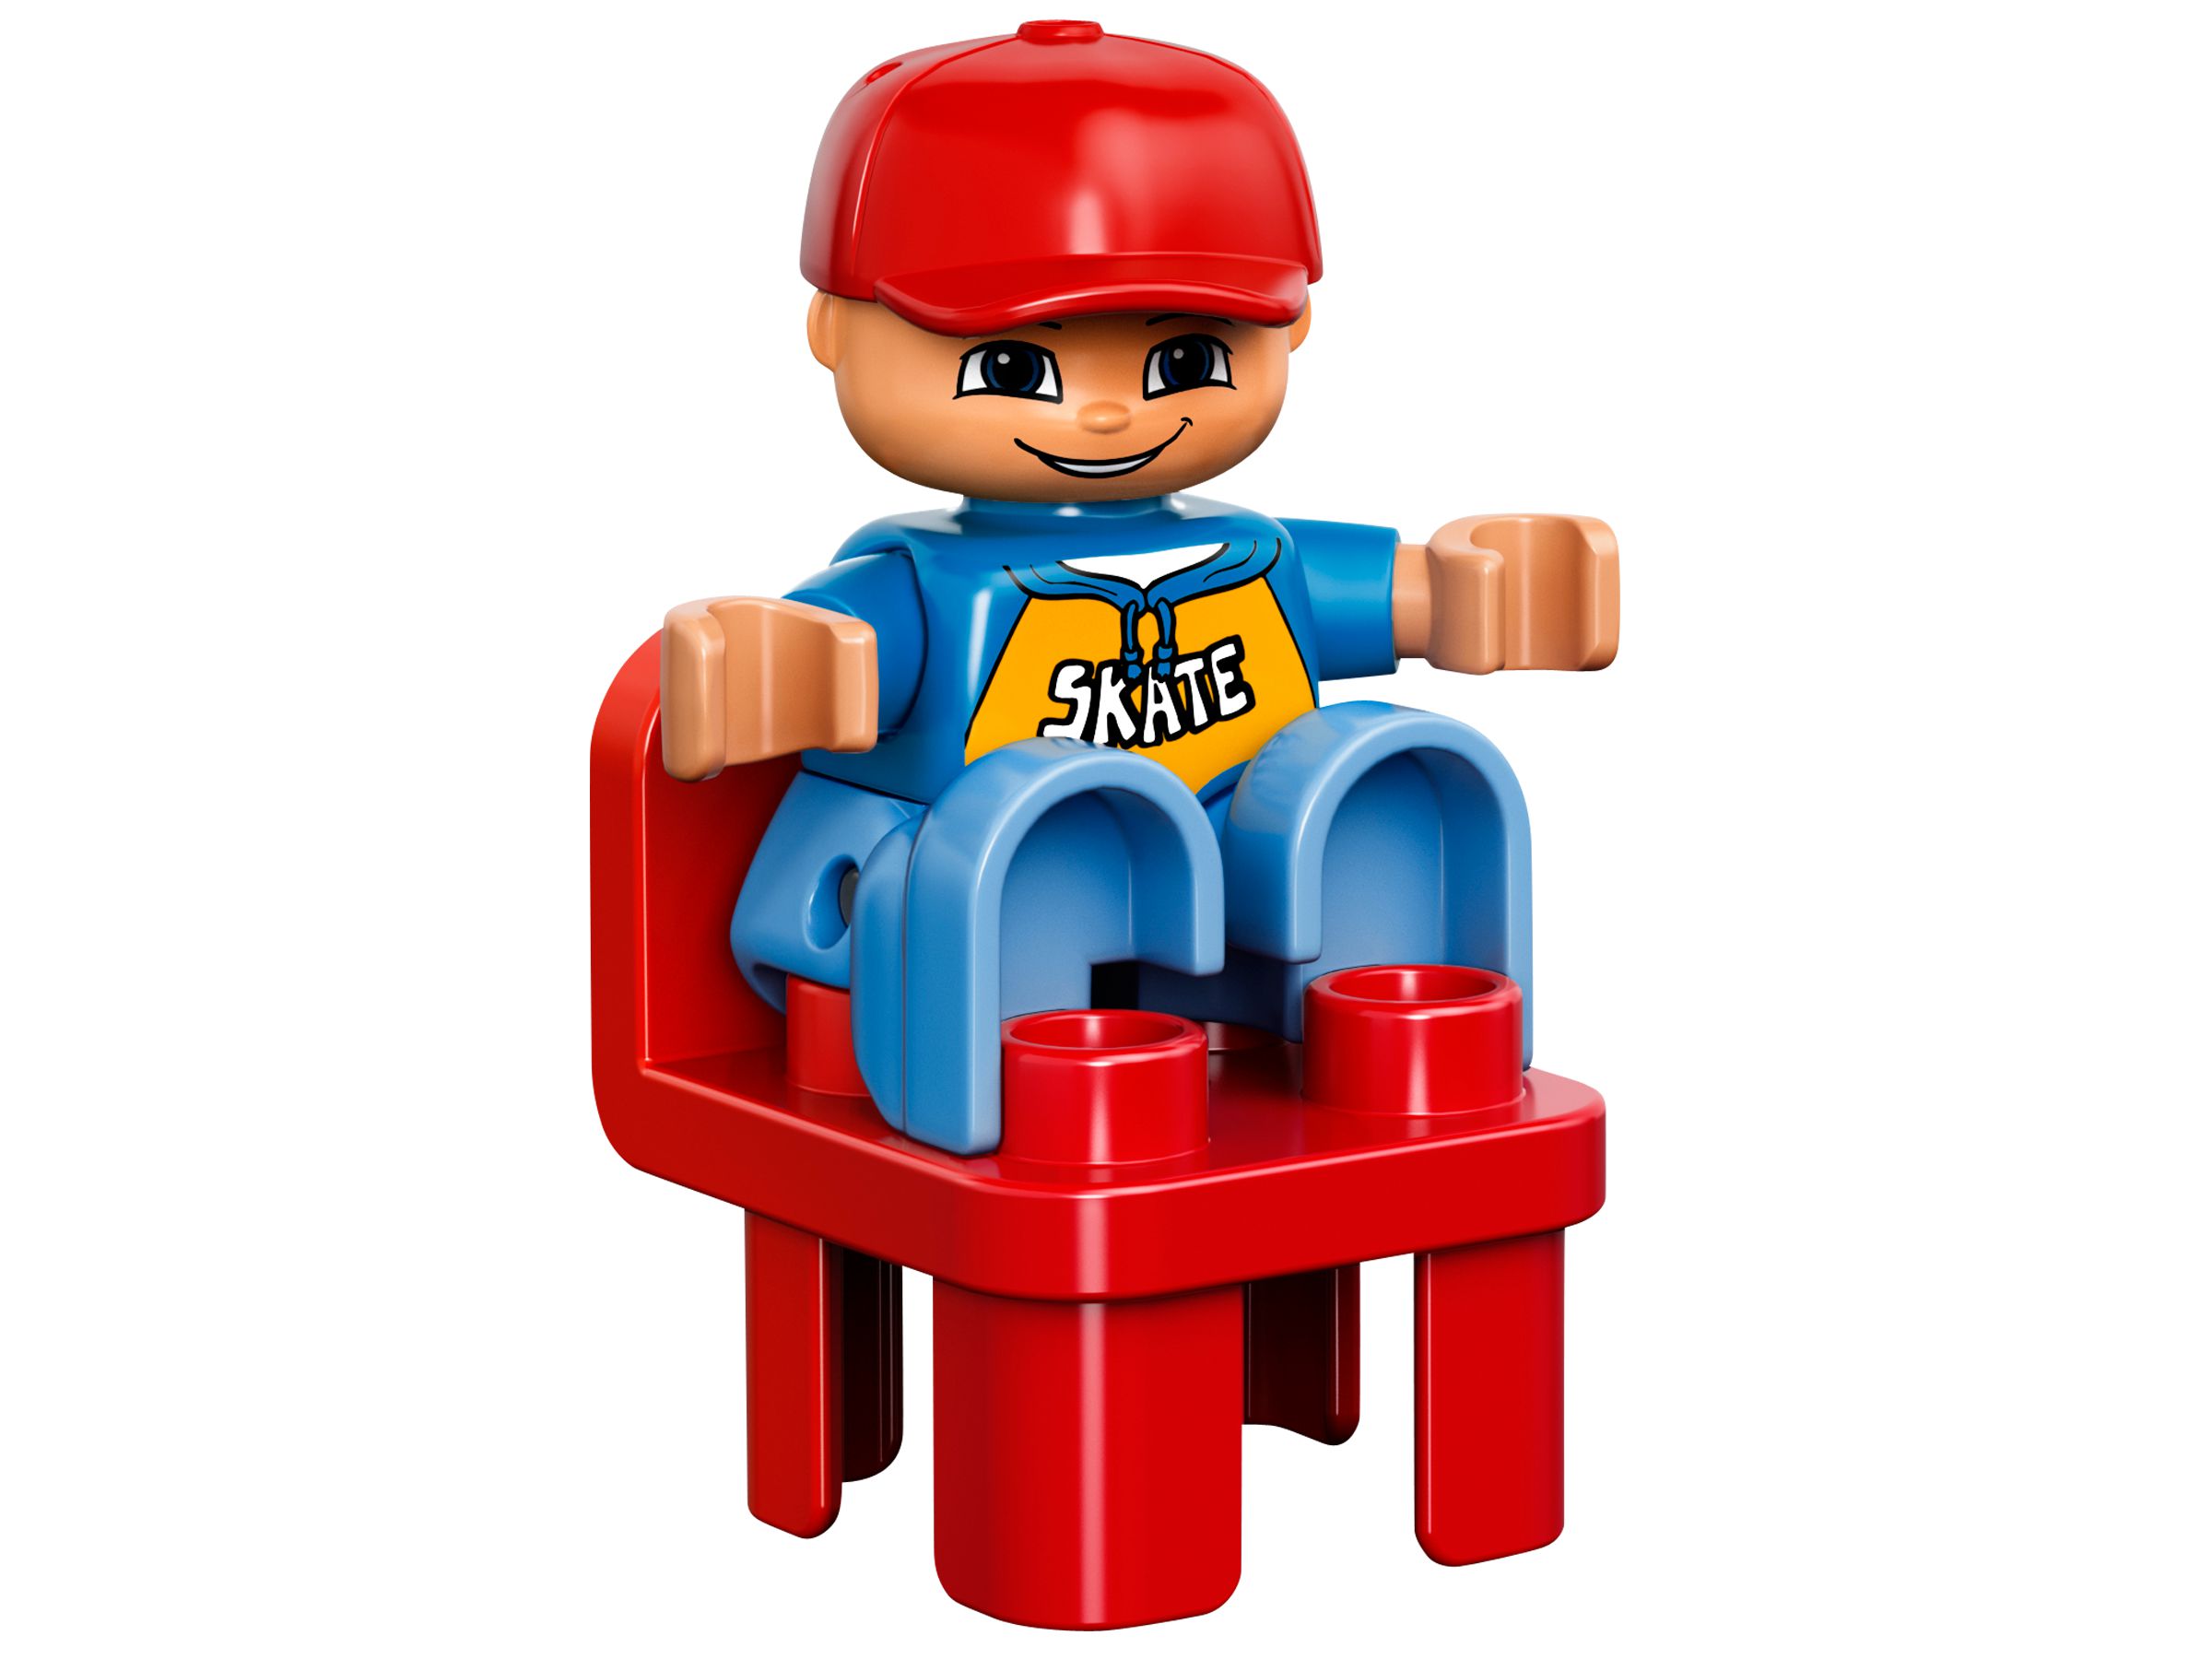 LEGO Duplo 10618 LEGO® DUPLO® Steinebox LEGO_10618_alt7.jpg